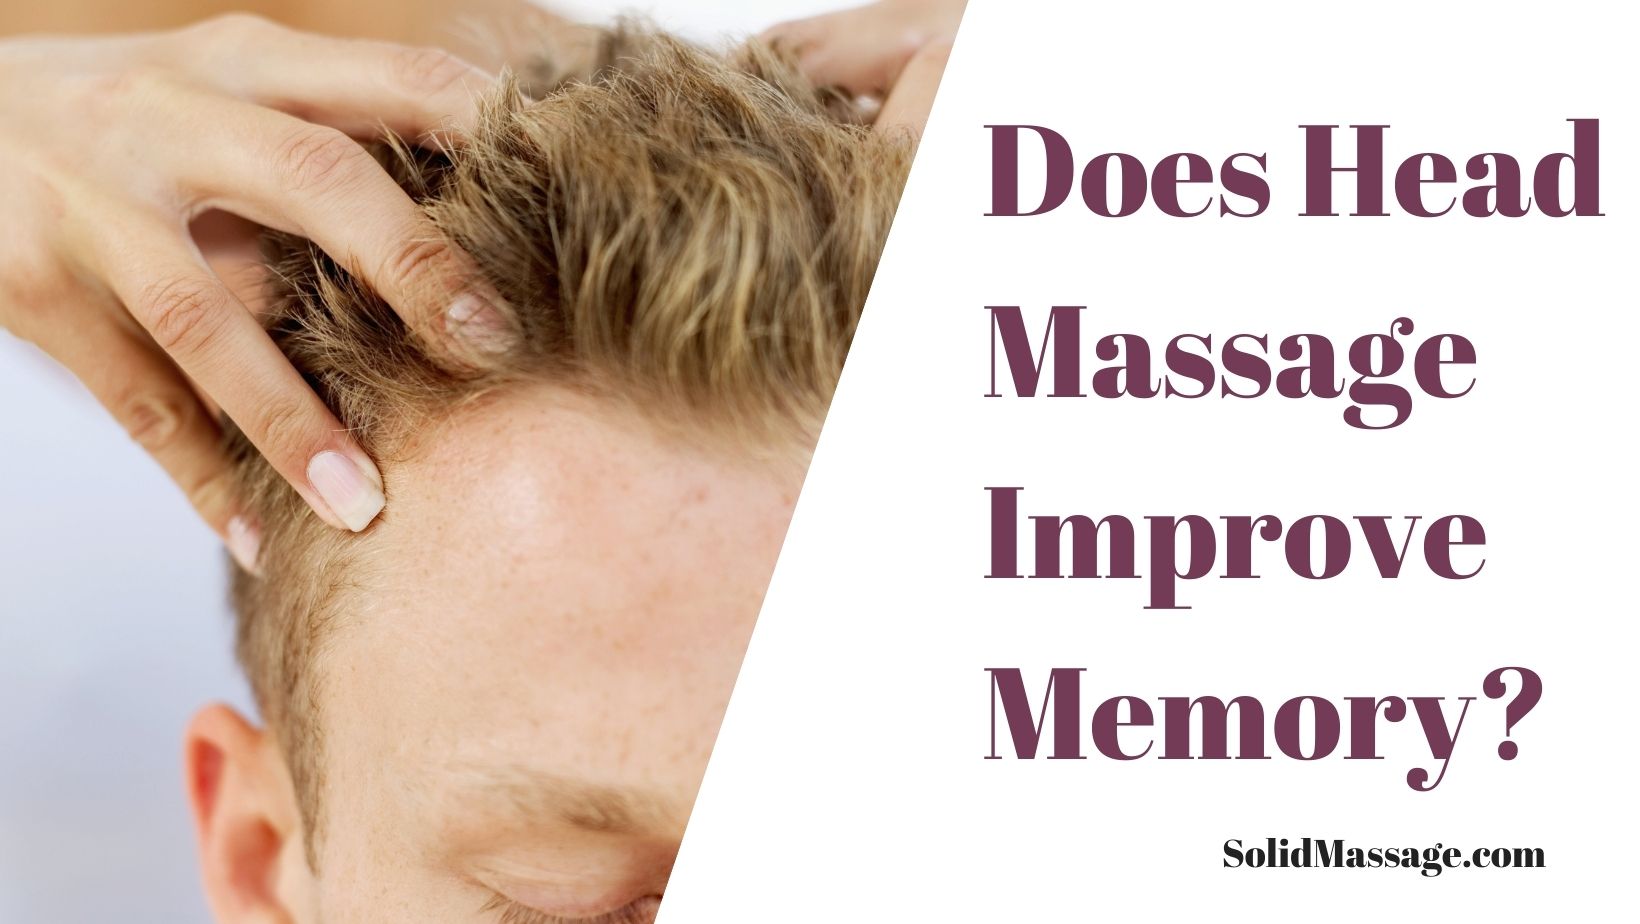 Does Head Massage Improve Memory